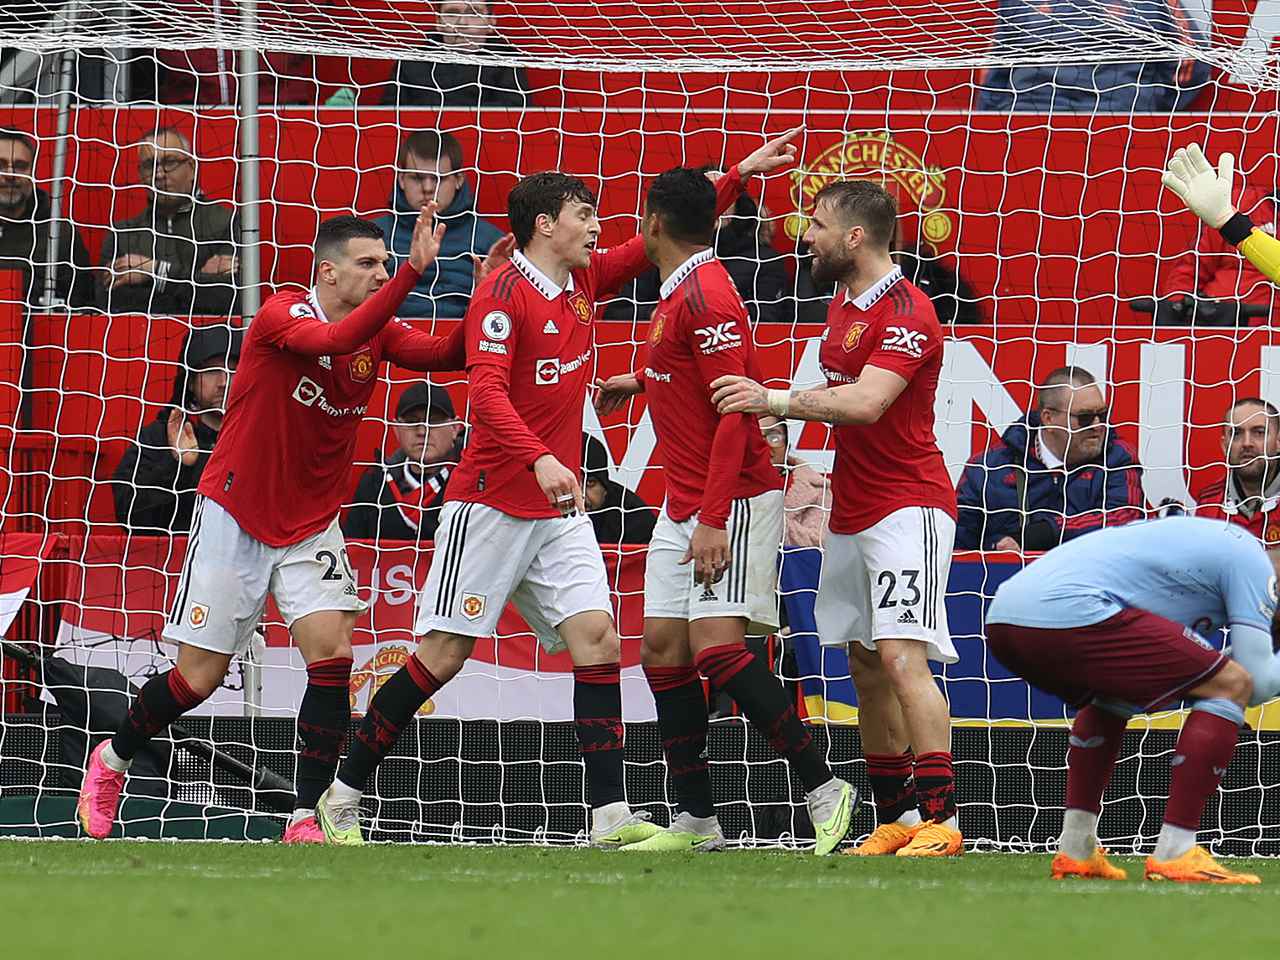 Man Utd 1 Aston Villa 0 | Match Report | Manchester United